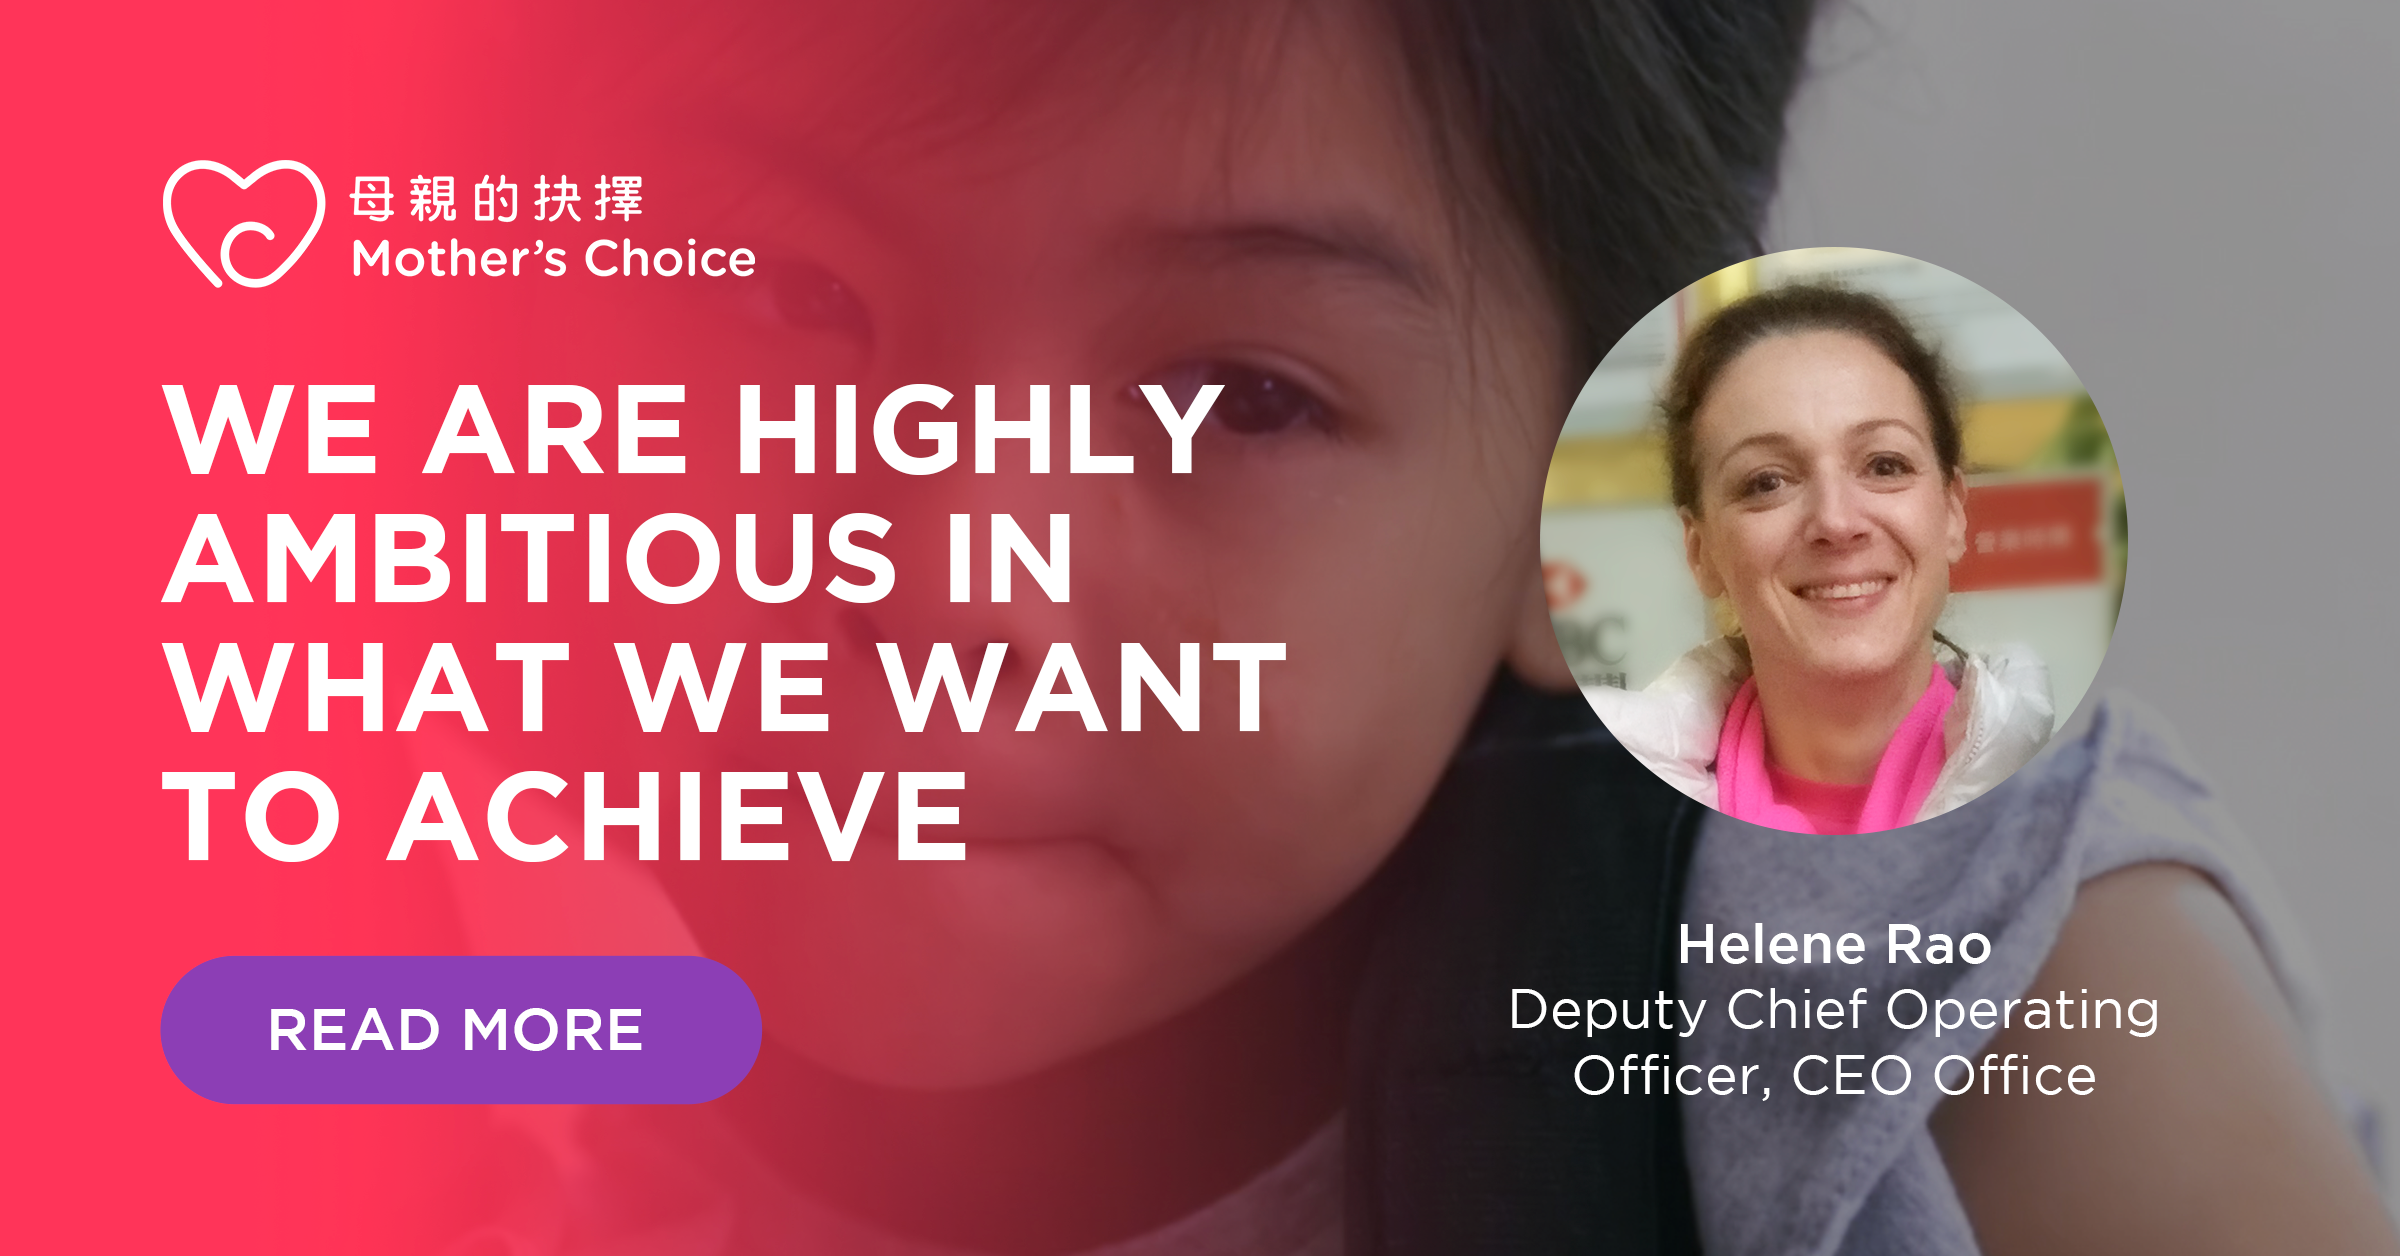 Helene Rao – Deputy Chief Operating Officer, CEO Office